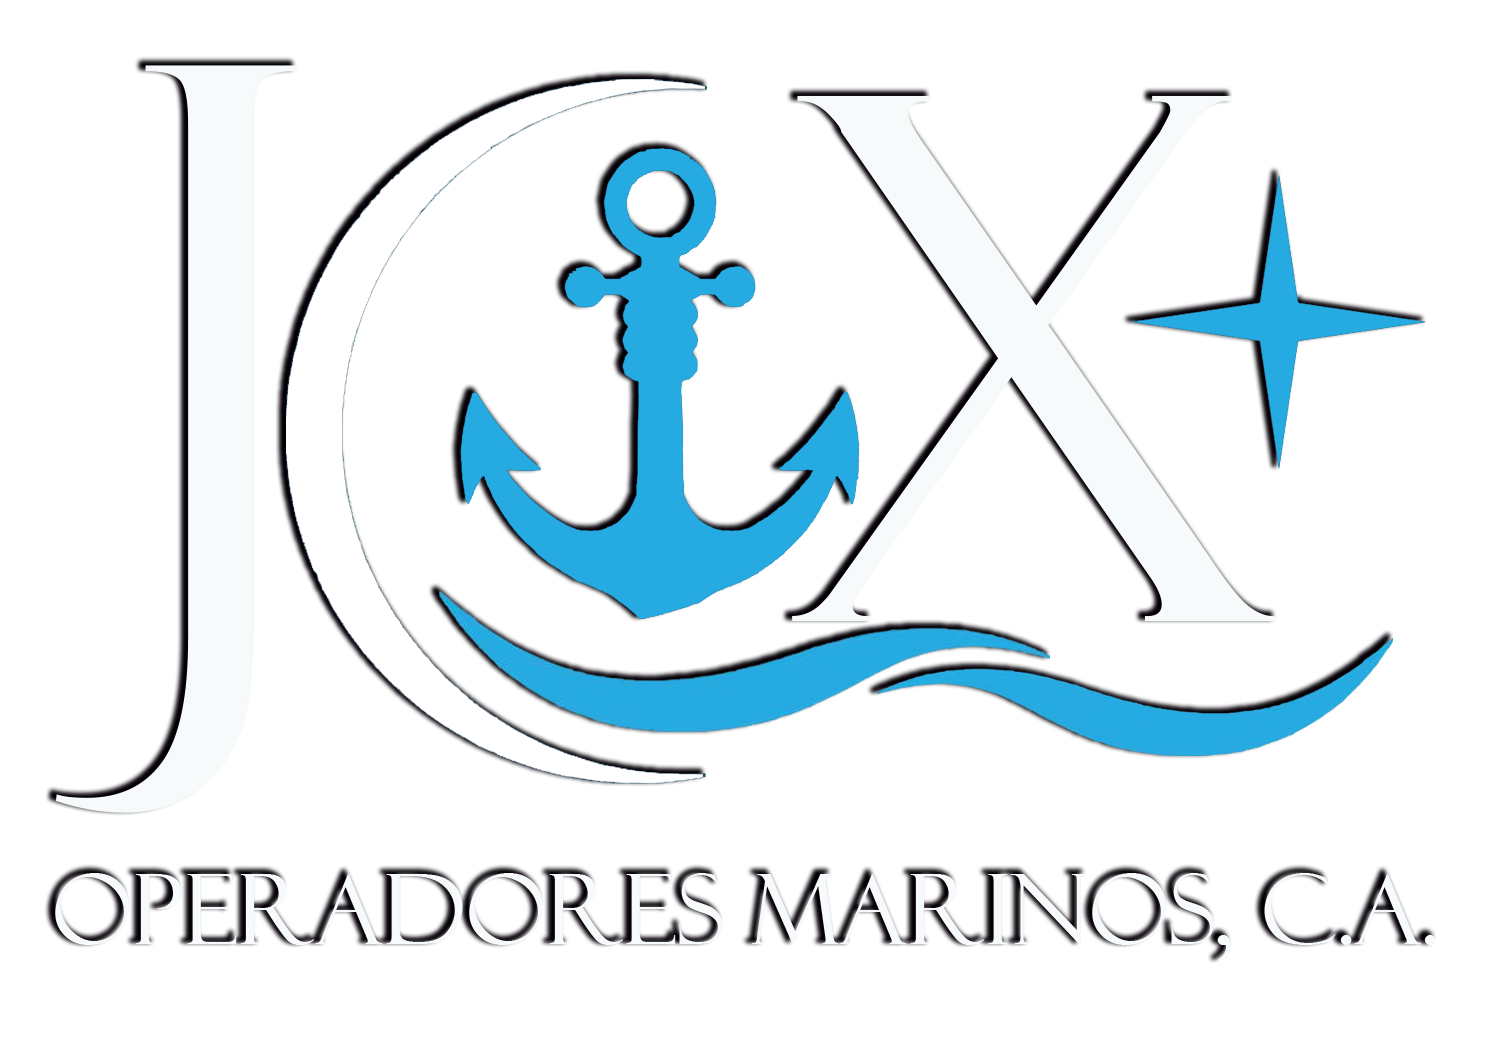 operadores marinos jcx 